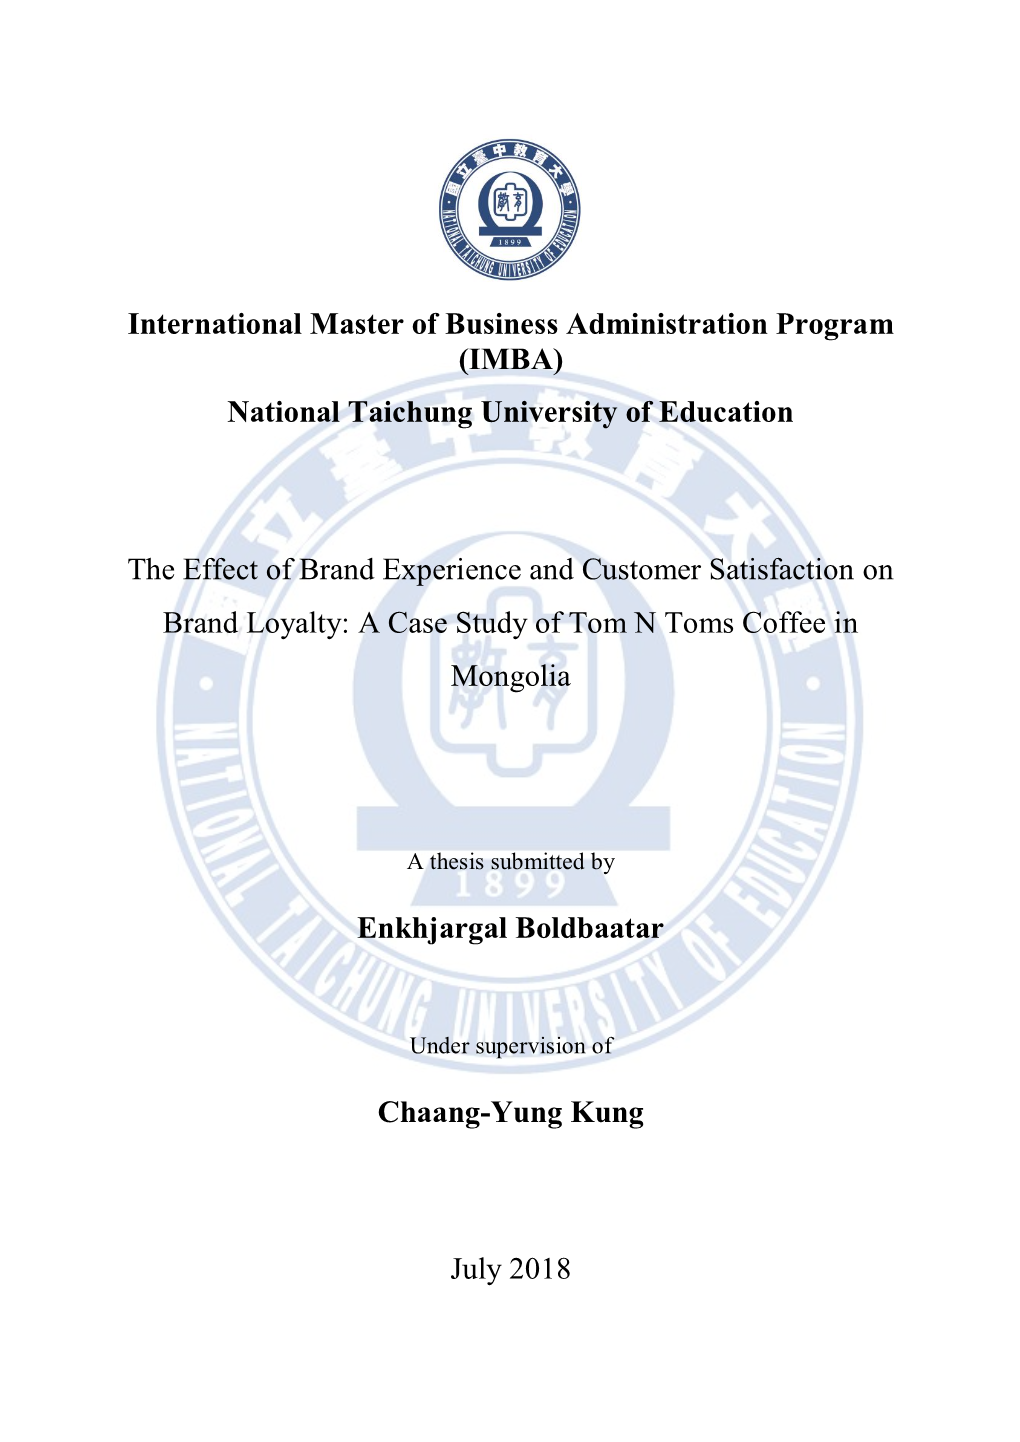 International Master of Business Administration Program (IMBA) National Taichung University of Education